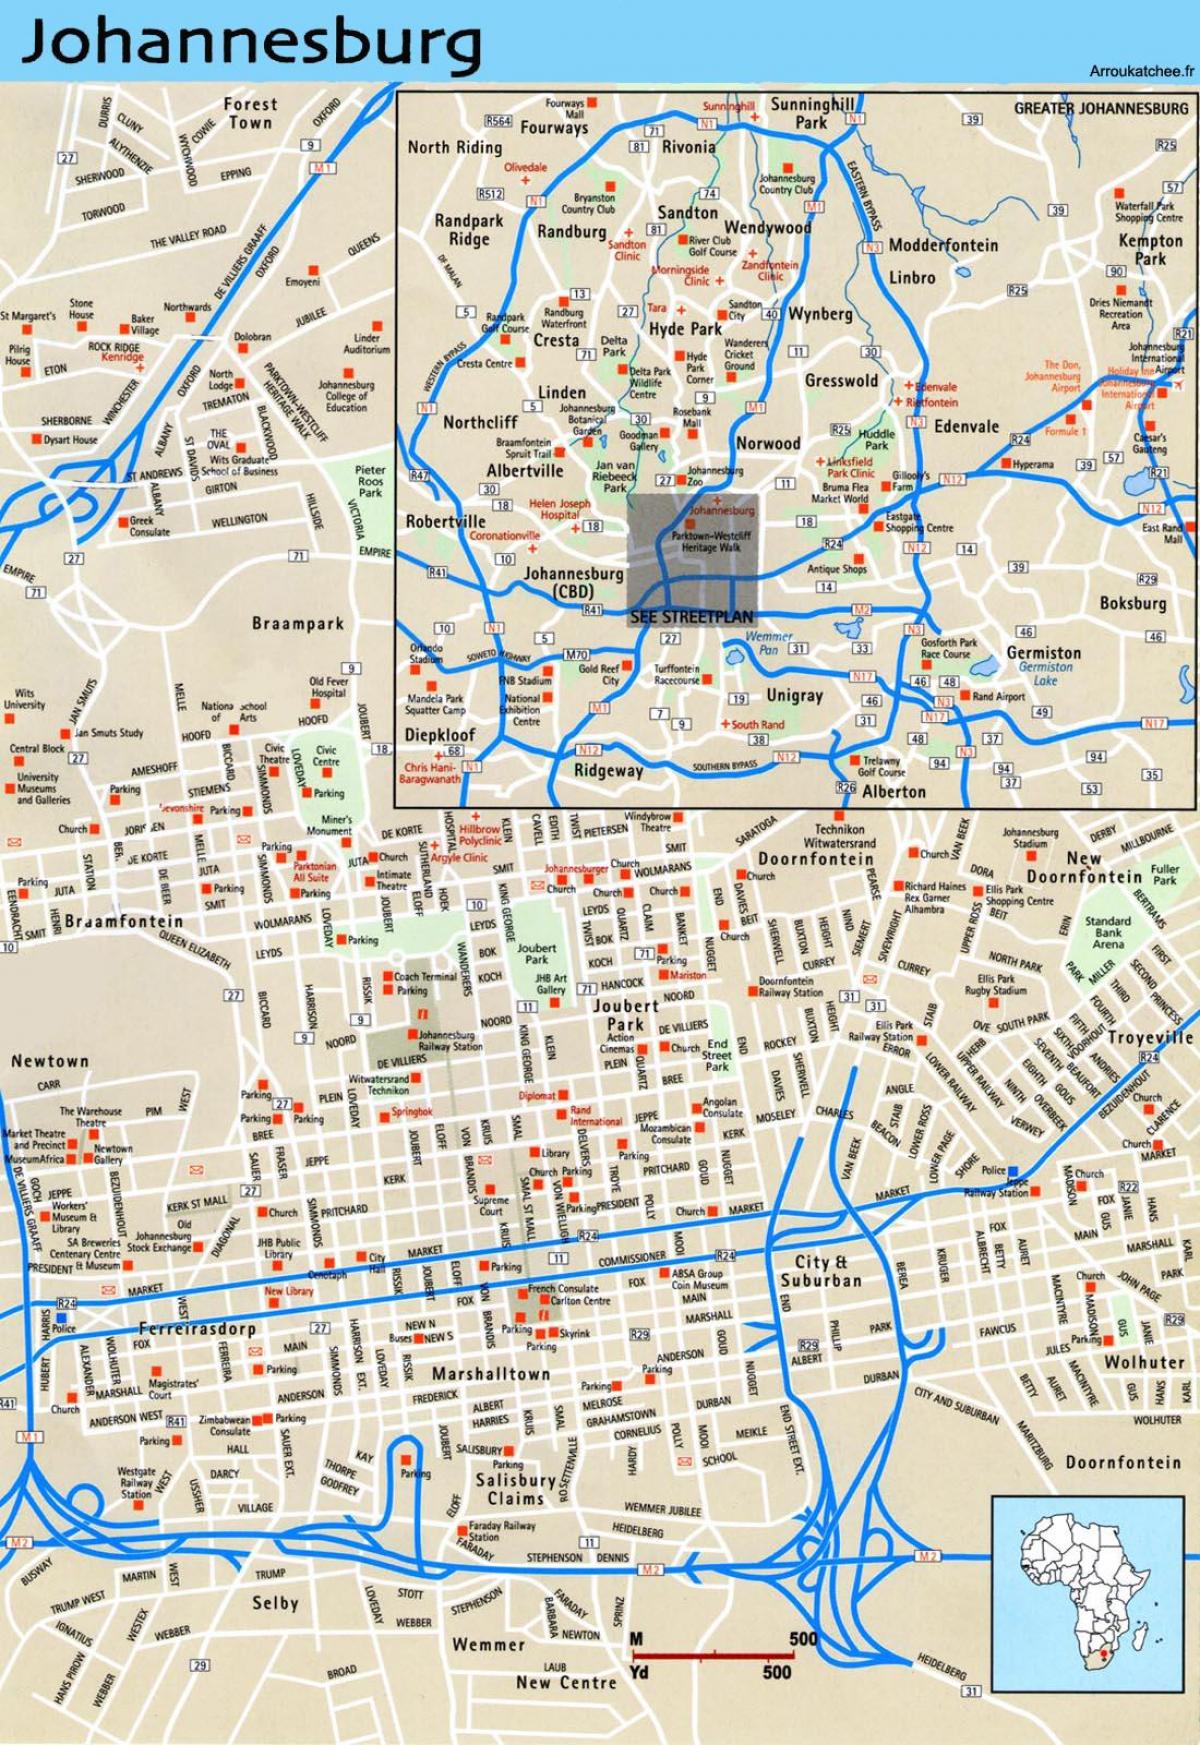 Johannesburg (Joburg Jozi) city map